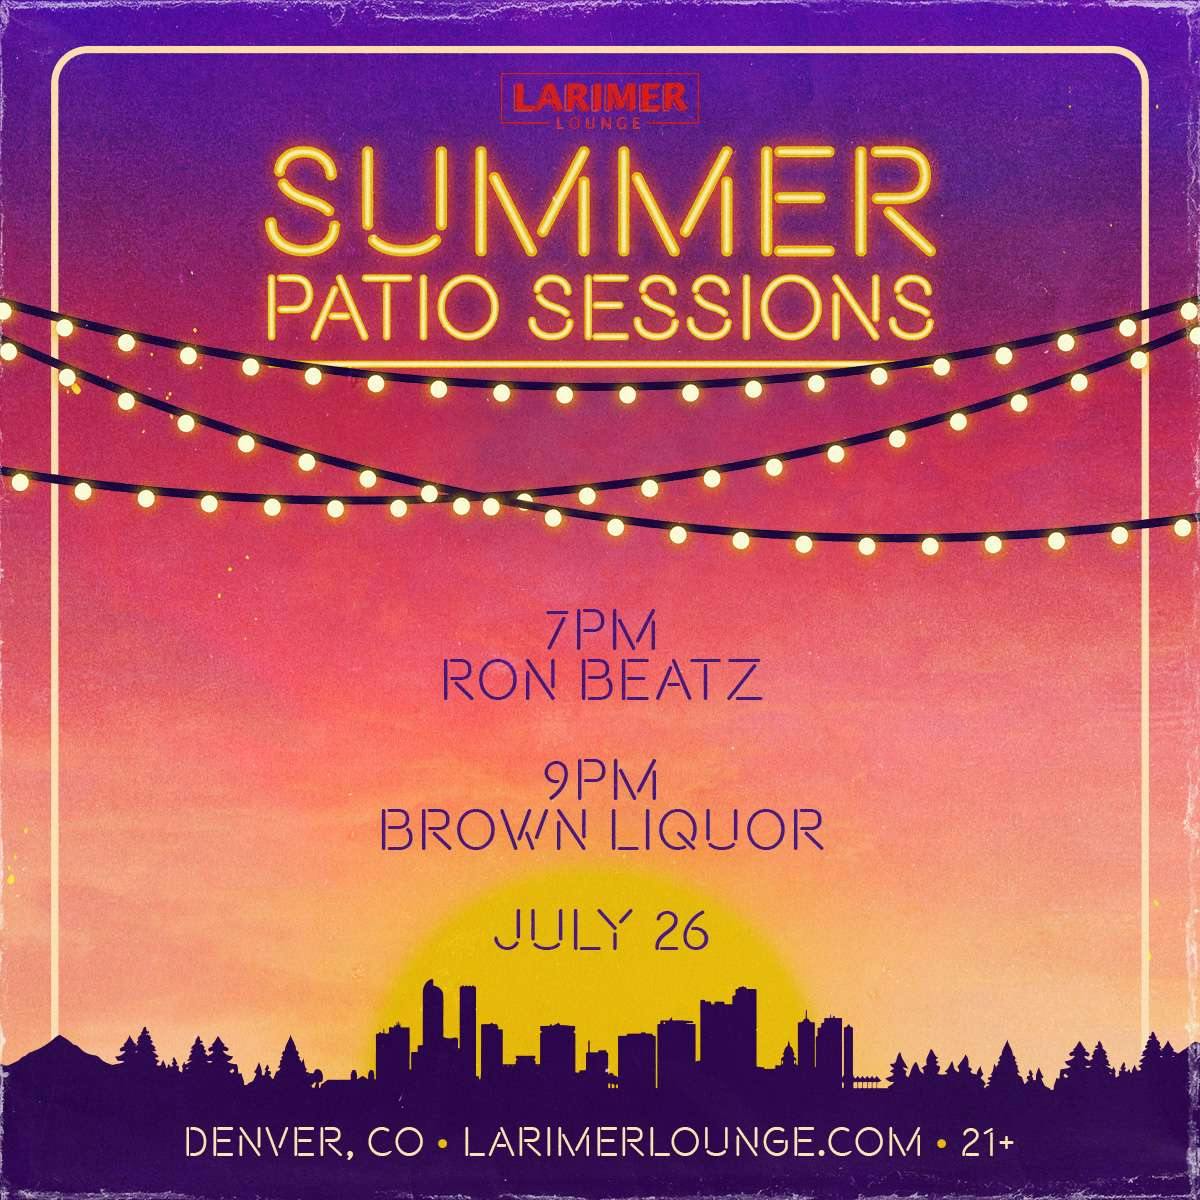 Summer Sessions - Ron Beatz - Brown Liquor (FREE EVENTS)